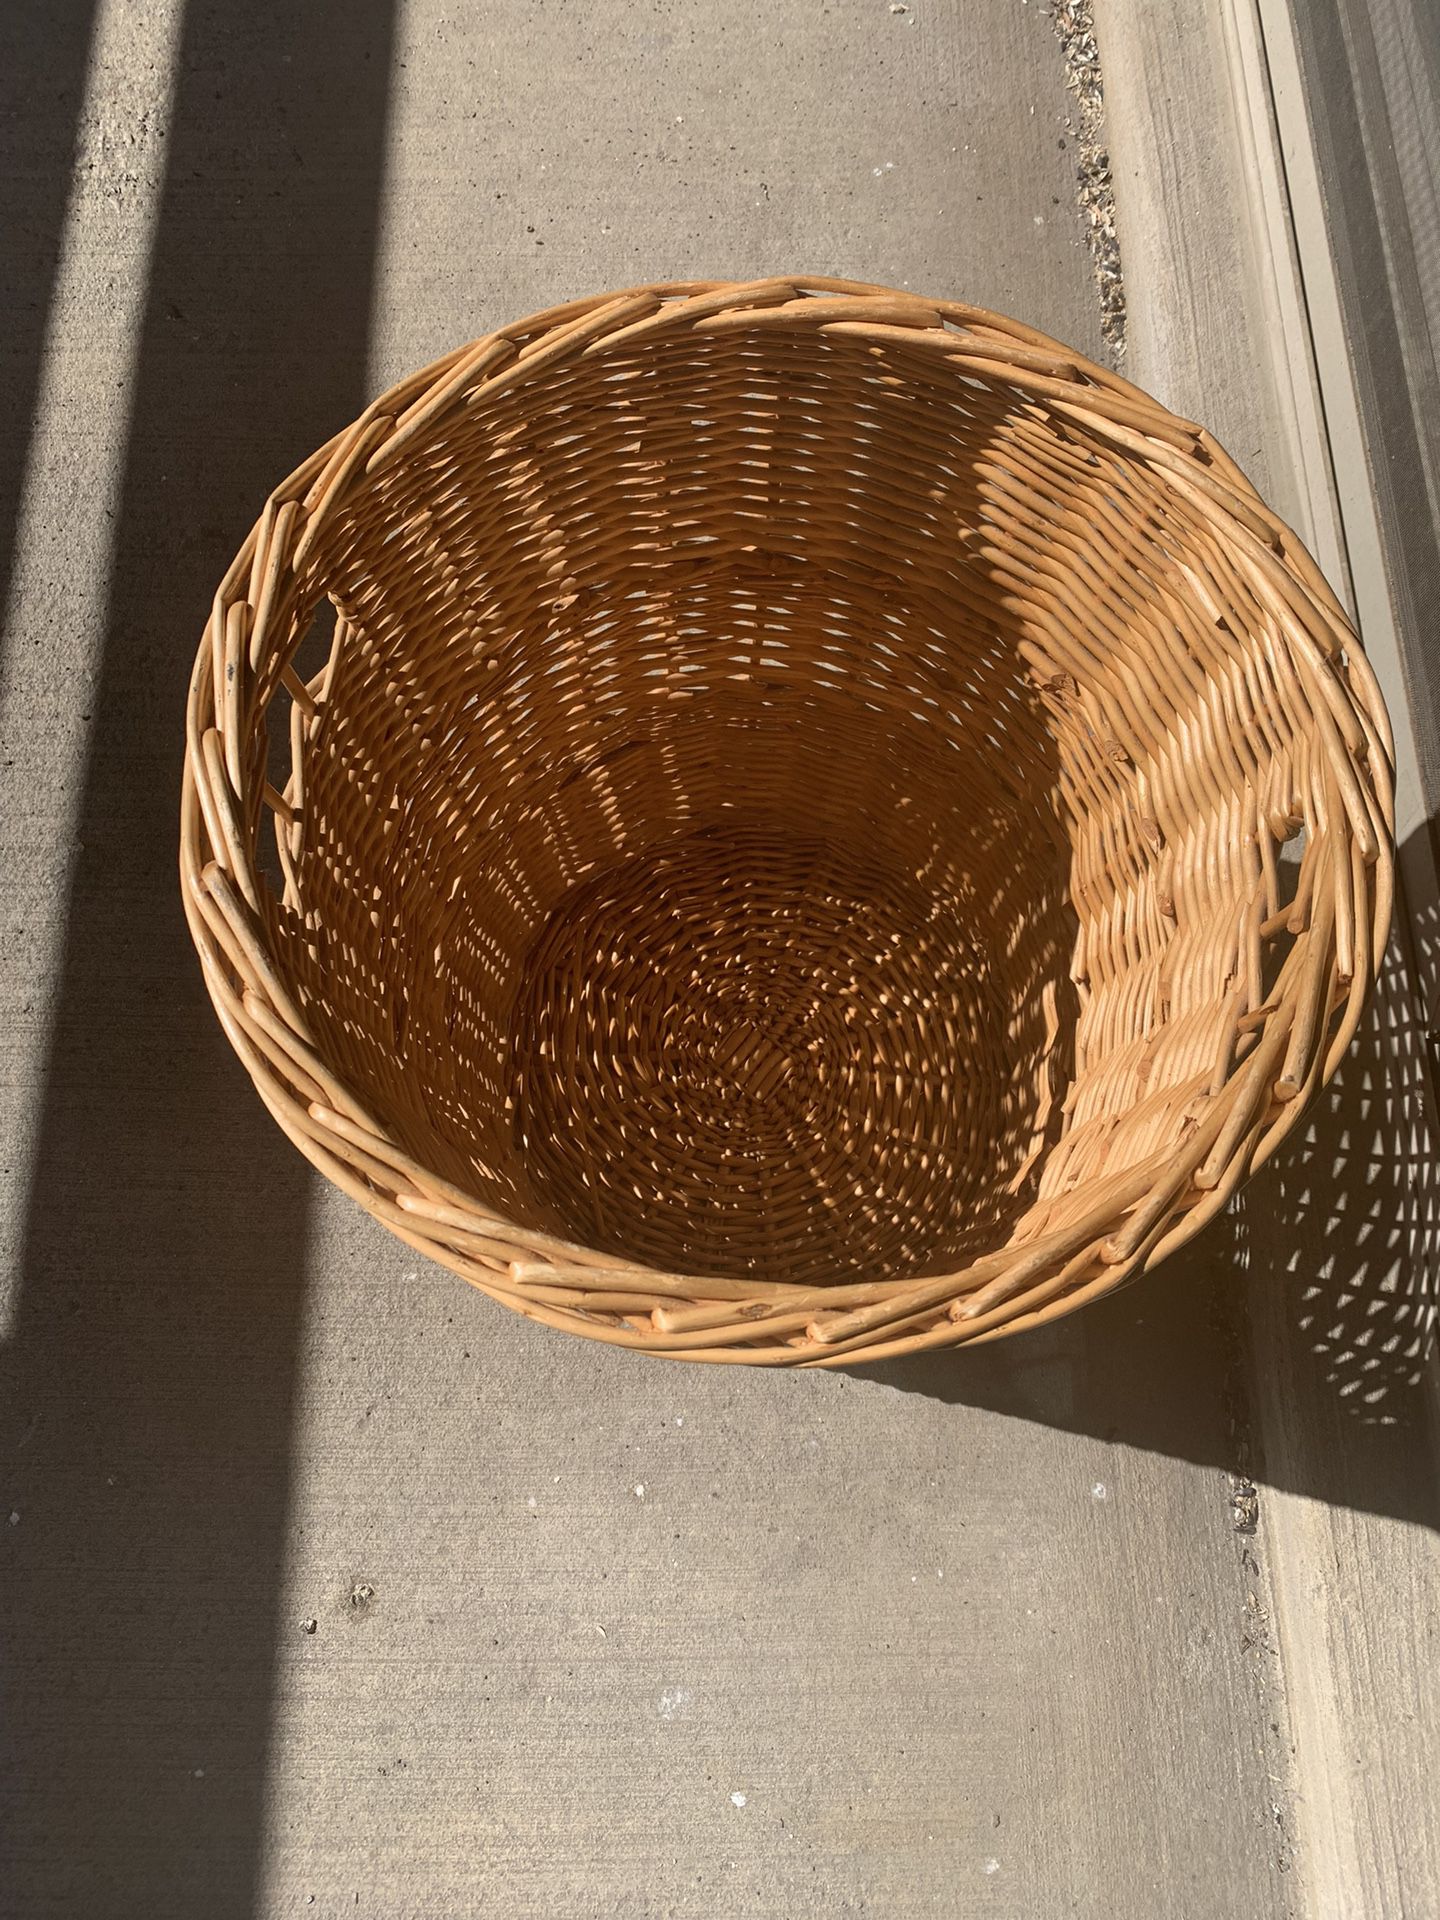 Laundry Basket Rattan Wicker Cane